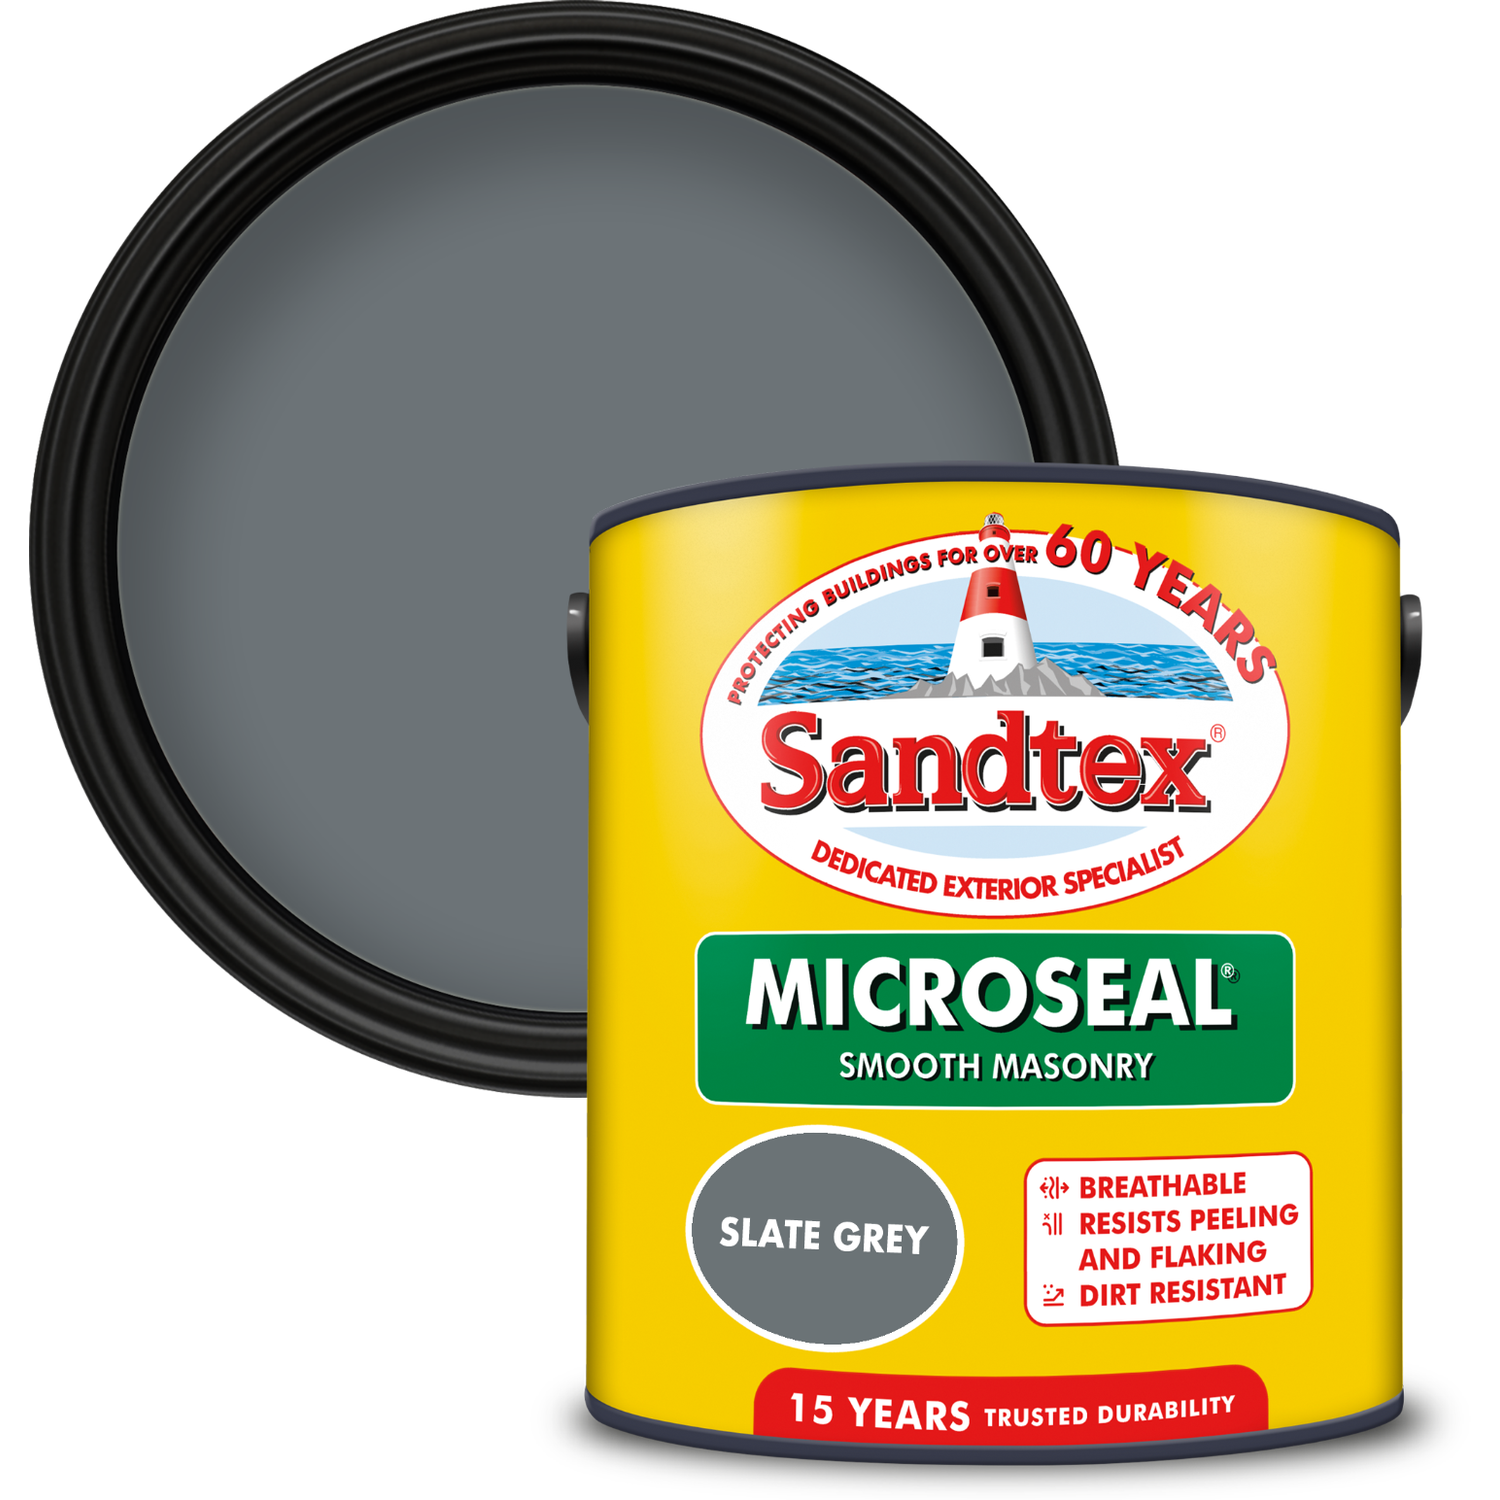 Sandtex Walls Slate Grey Microseal Smooth Masonry Matt Paint 2.5L Image 1